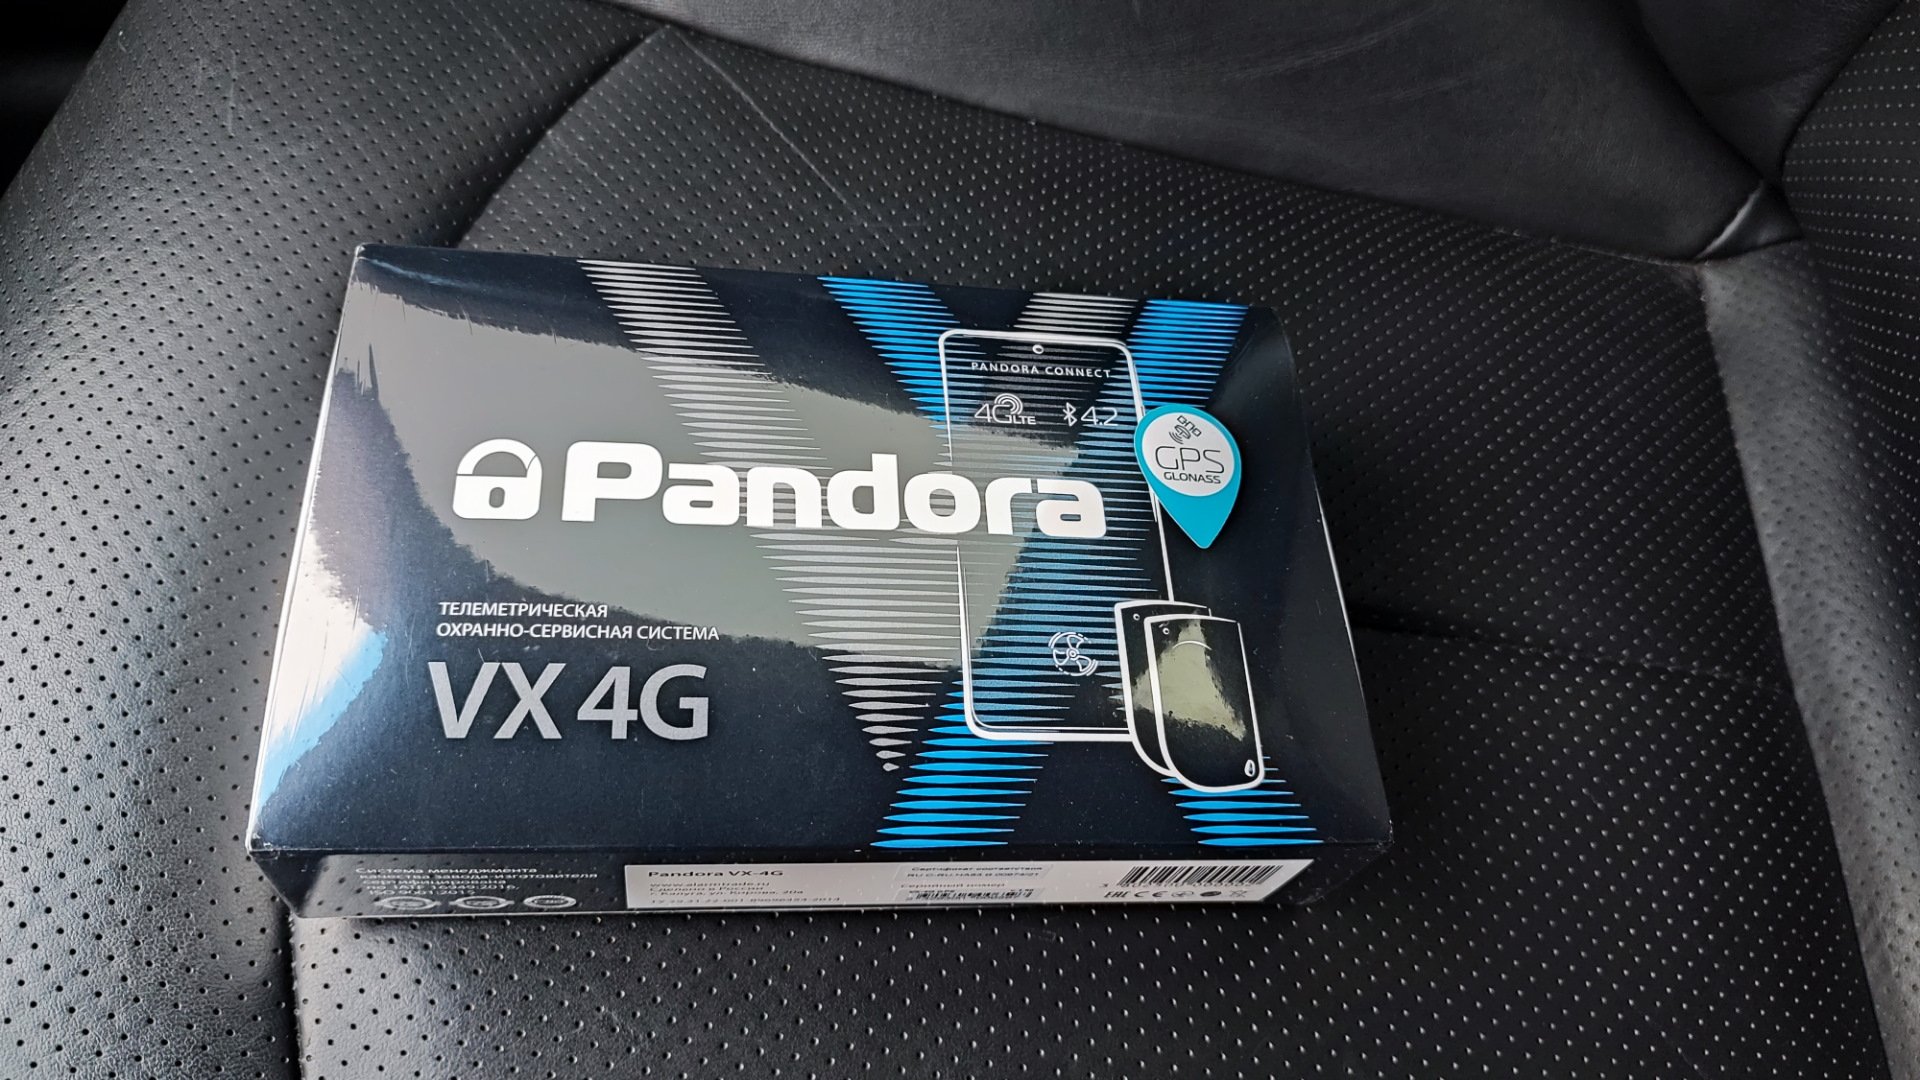 Pandora 4g gps v3. Пандора VX 4g GPS. Pandora VX 4g GPS. Автосигнализация pandora VX-4g GPS v2. Pandora VX 4g v2.